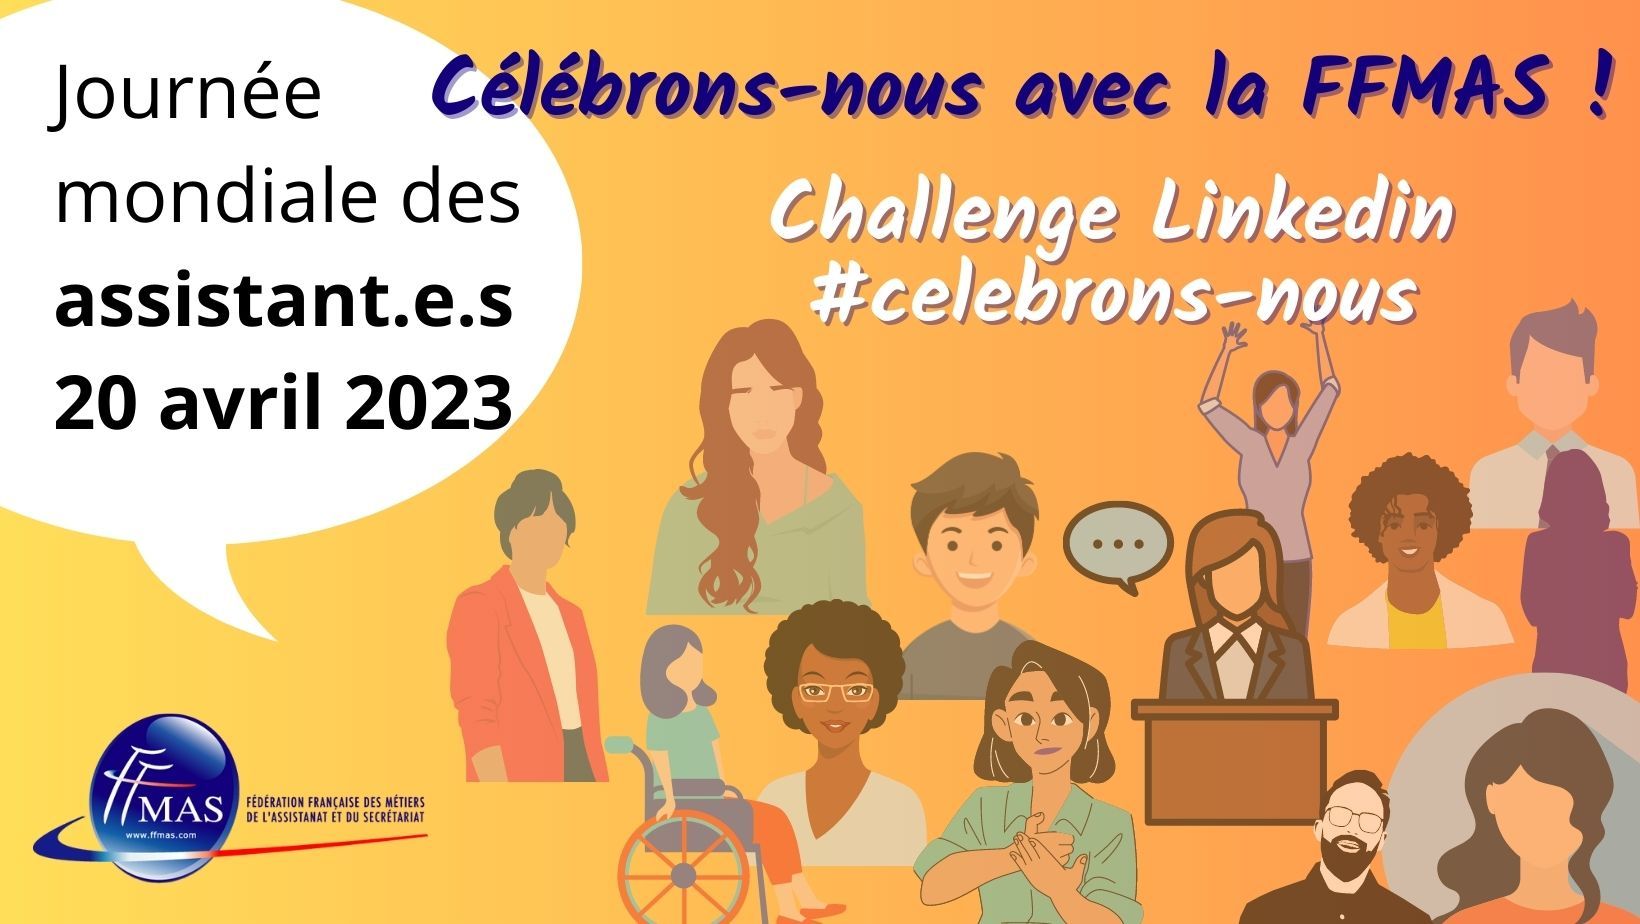 You are currently viewing Journée mondiale des assistant.e.s le 20 avril 2023 | Challenge #Celebrons-nous